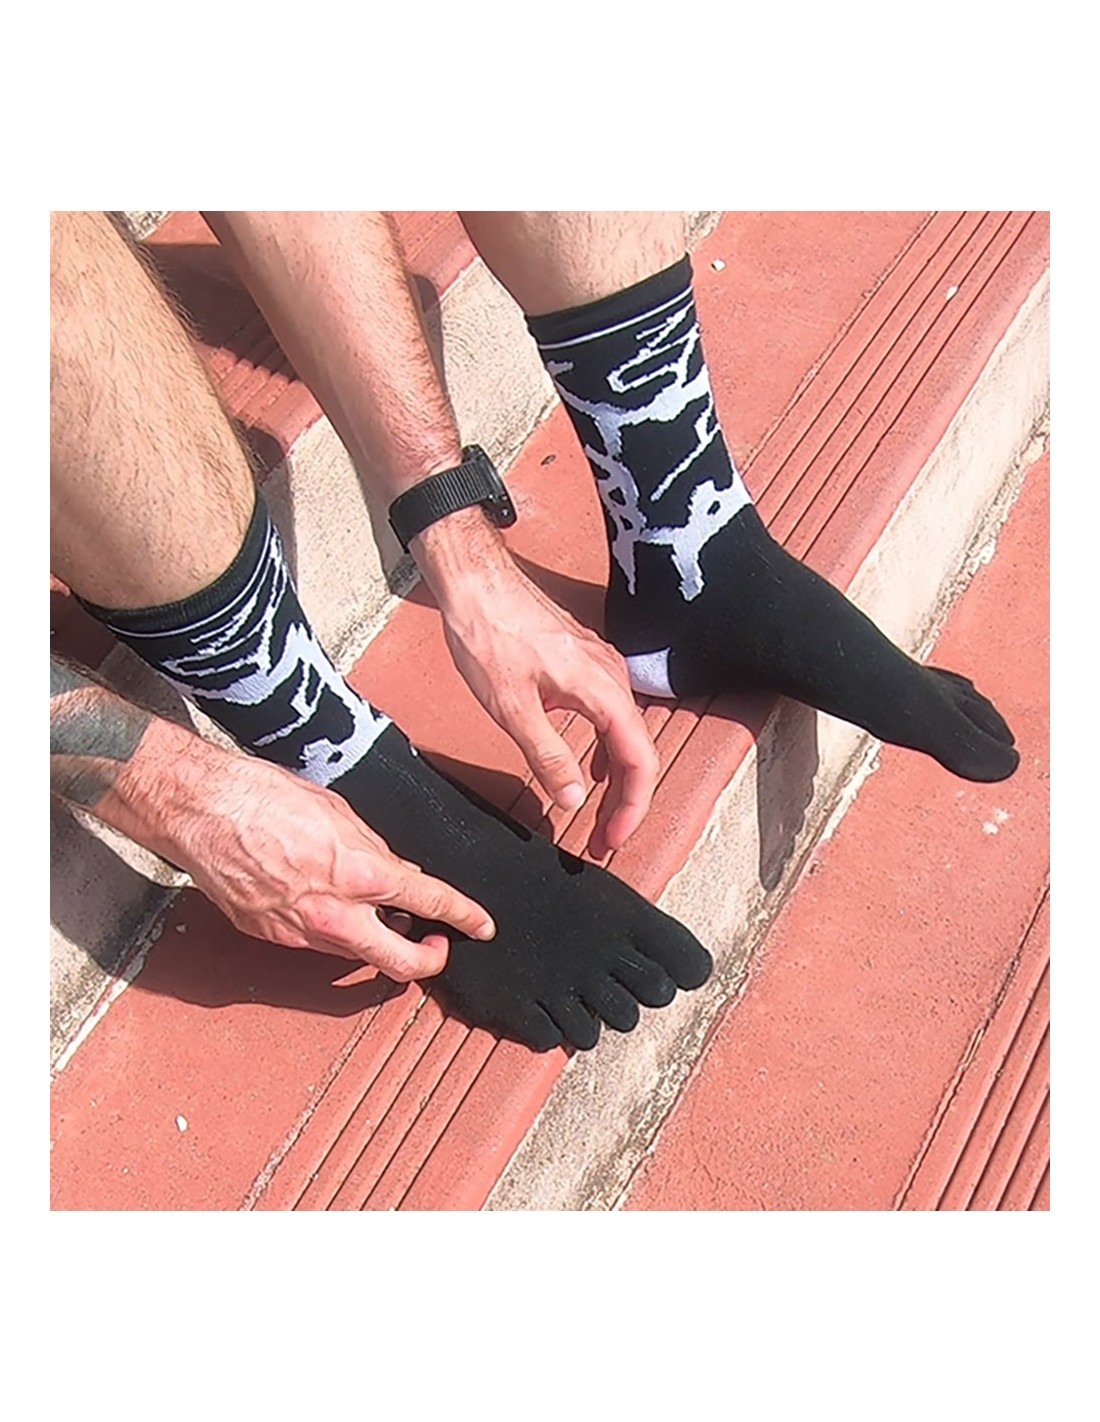 Toe Socks, 5 Fingers Cotton Mesh Wicking Socks Ankle Length Five